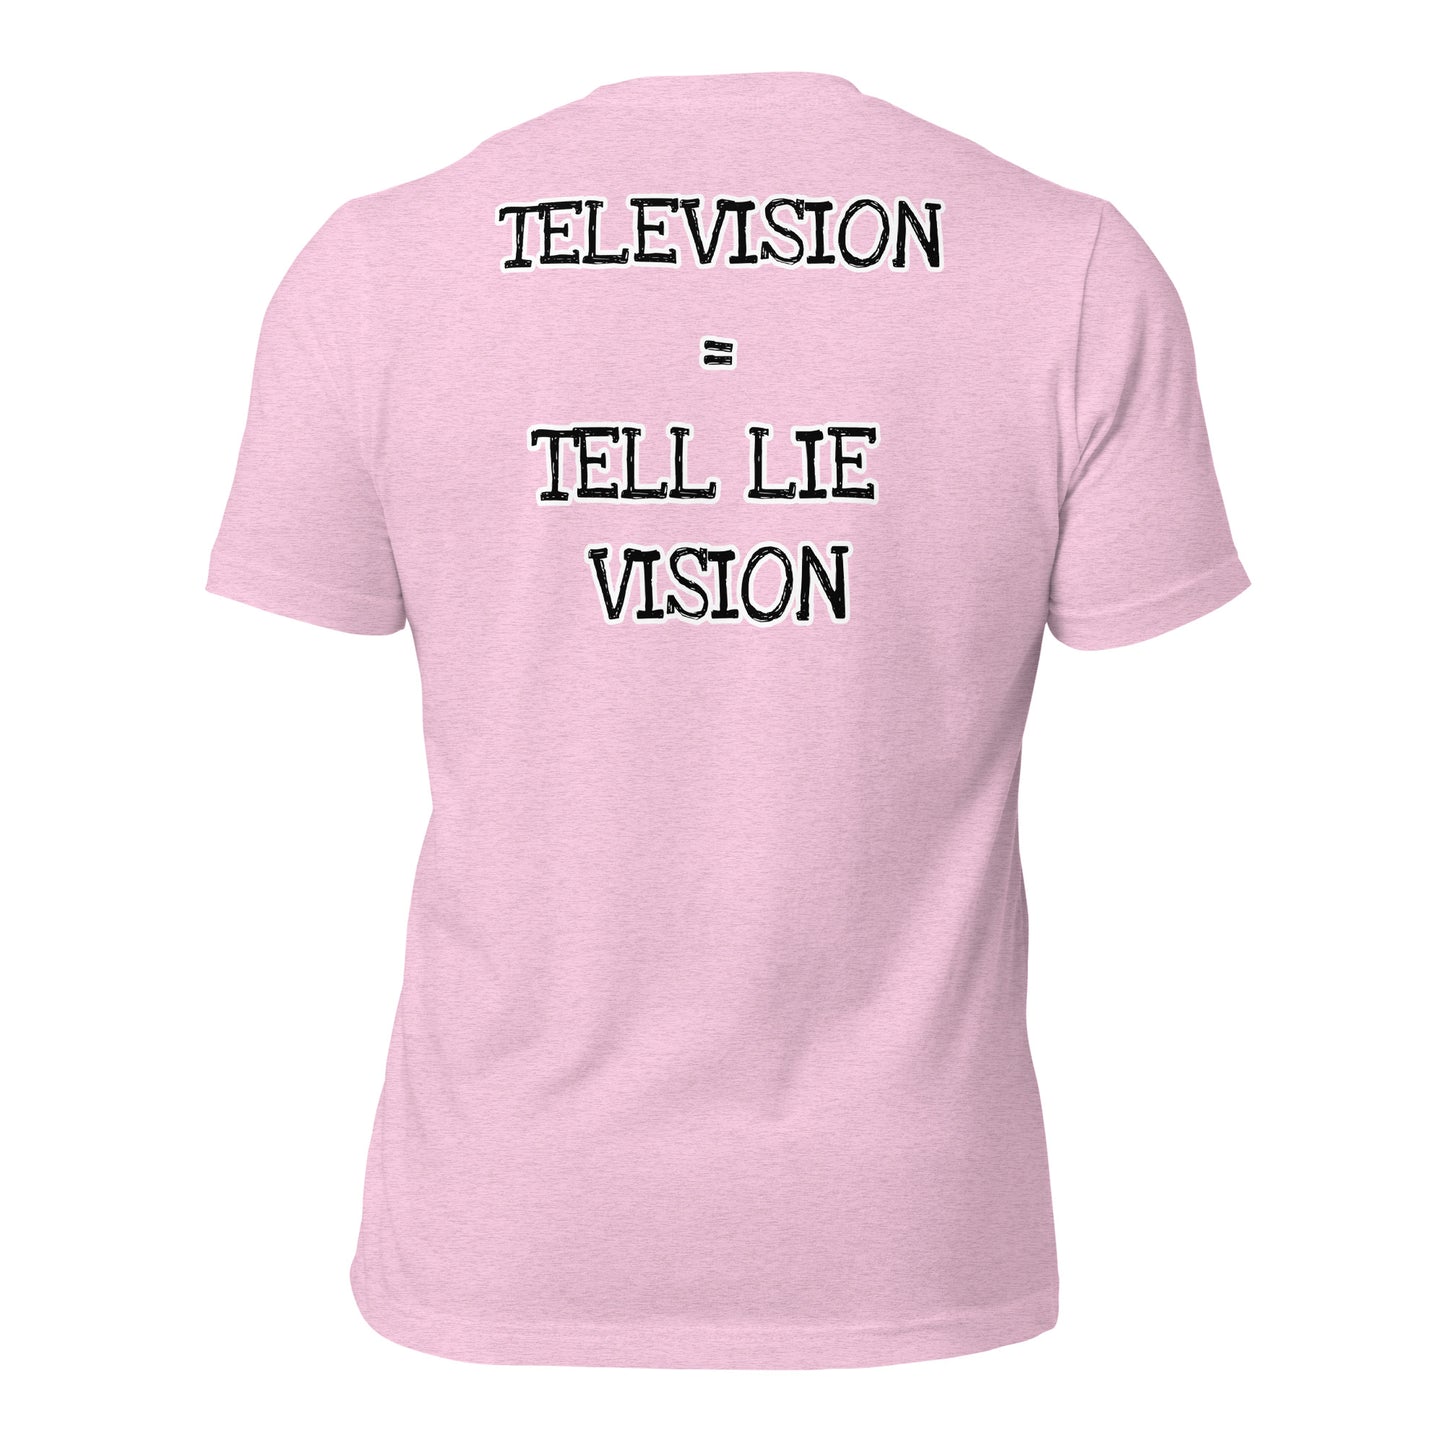 TELEVISION = TELL LIE VISION